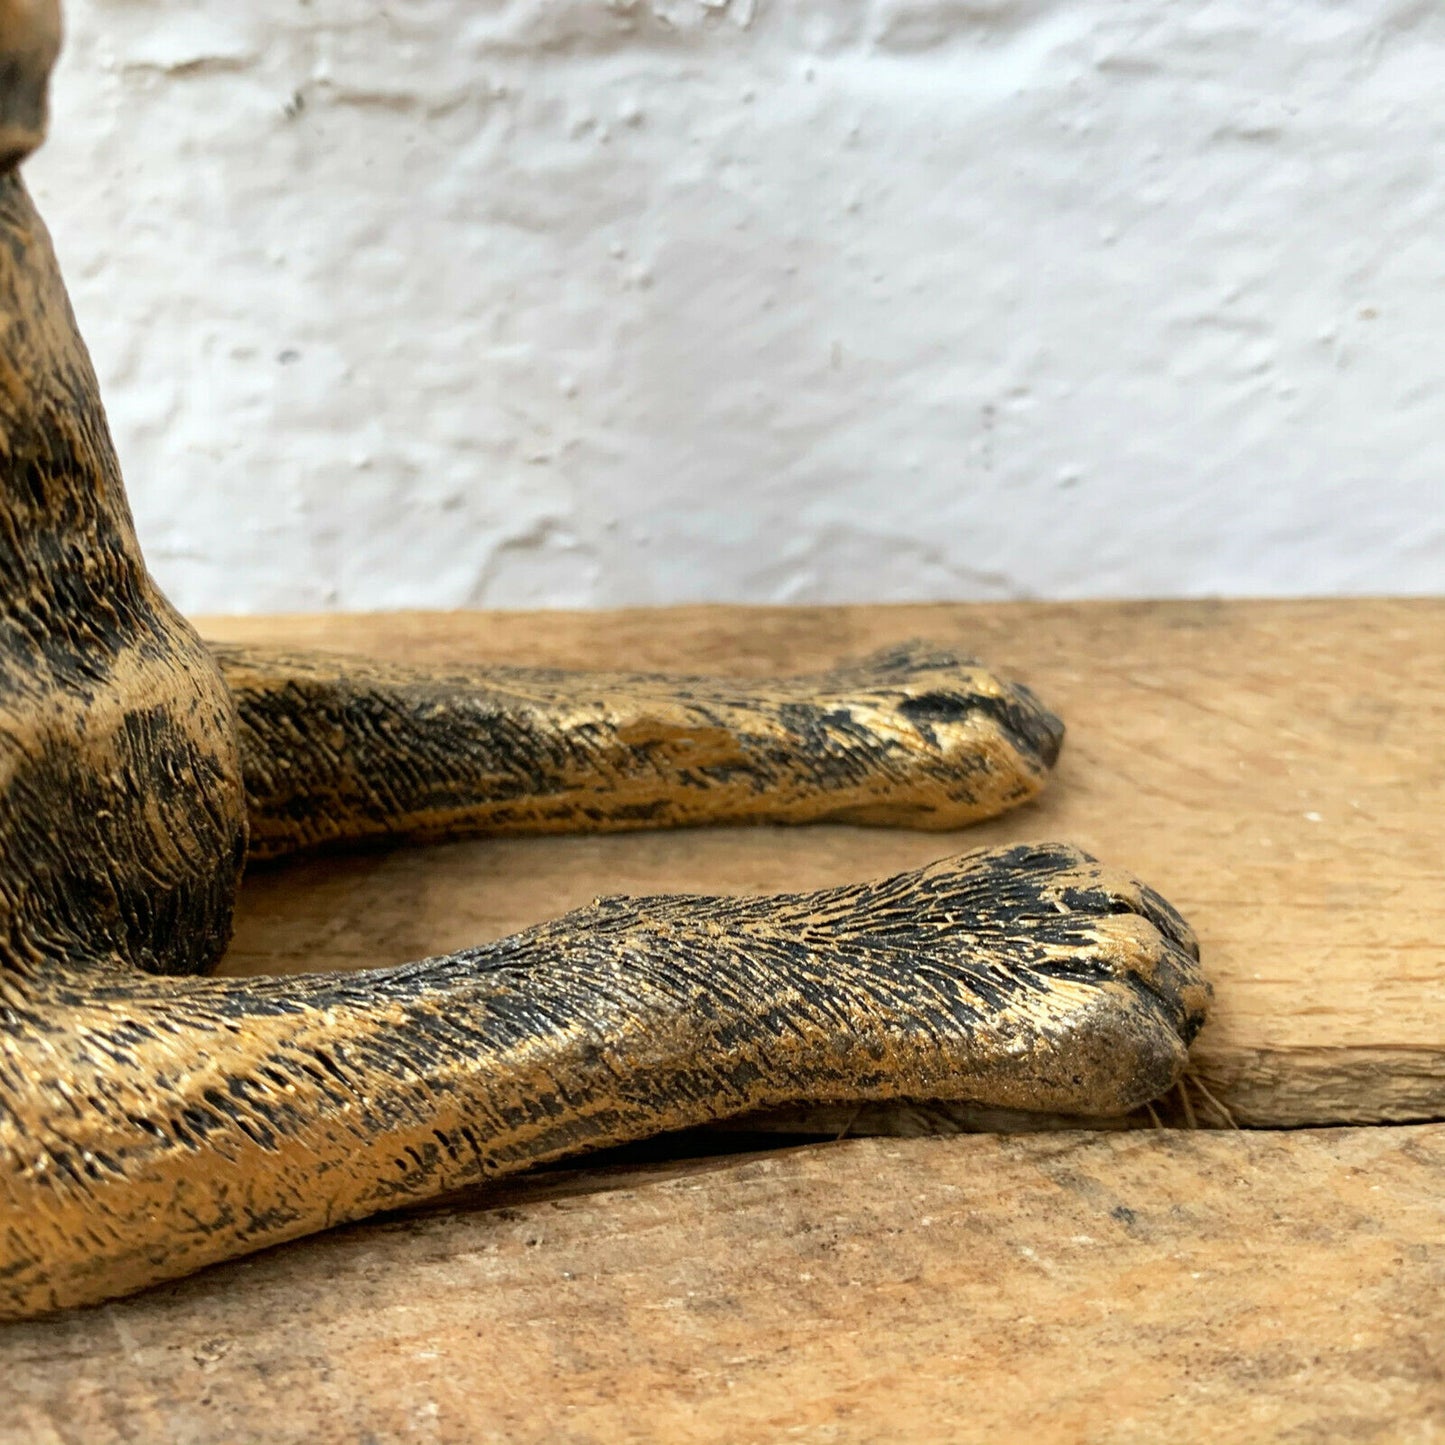 Resin Gold Lying Hare Sculpture 24cm